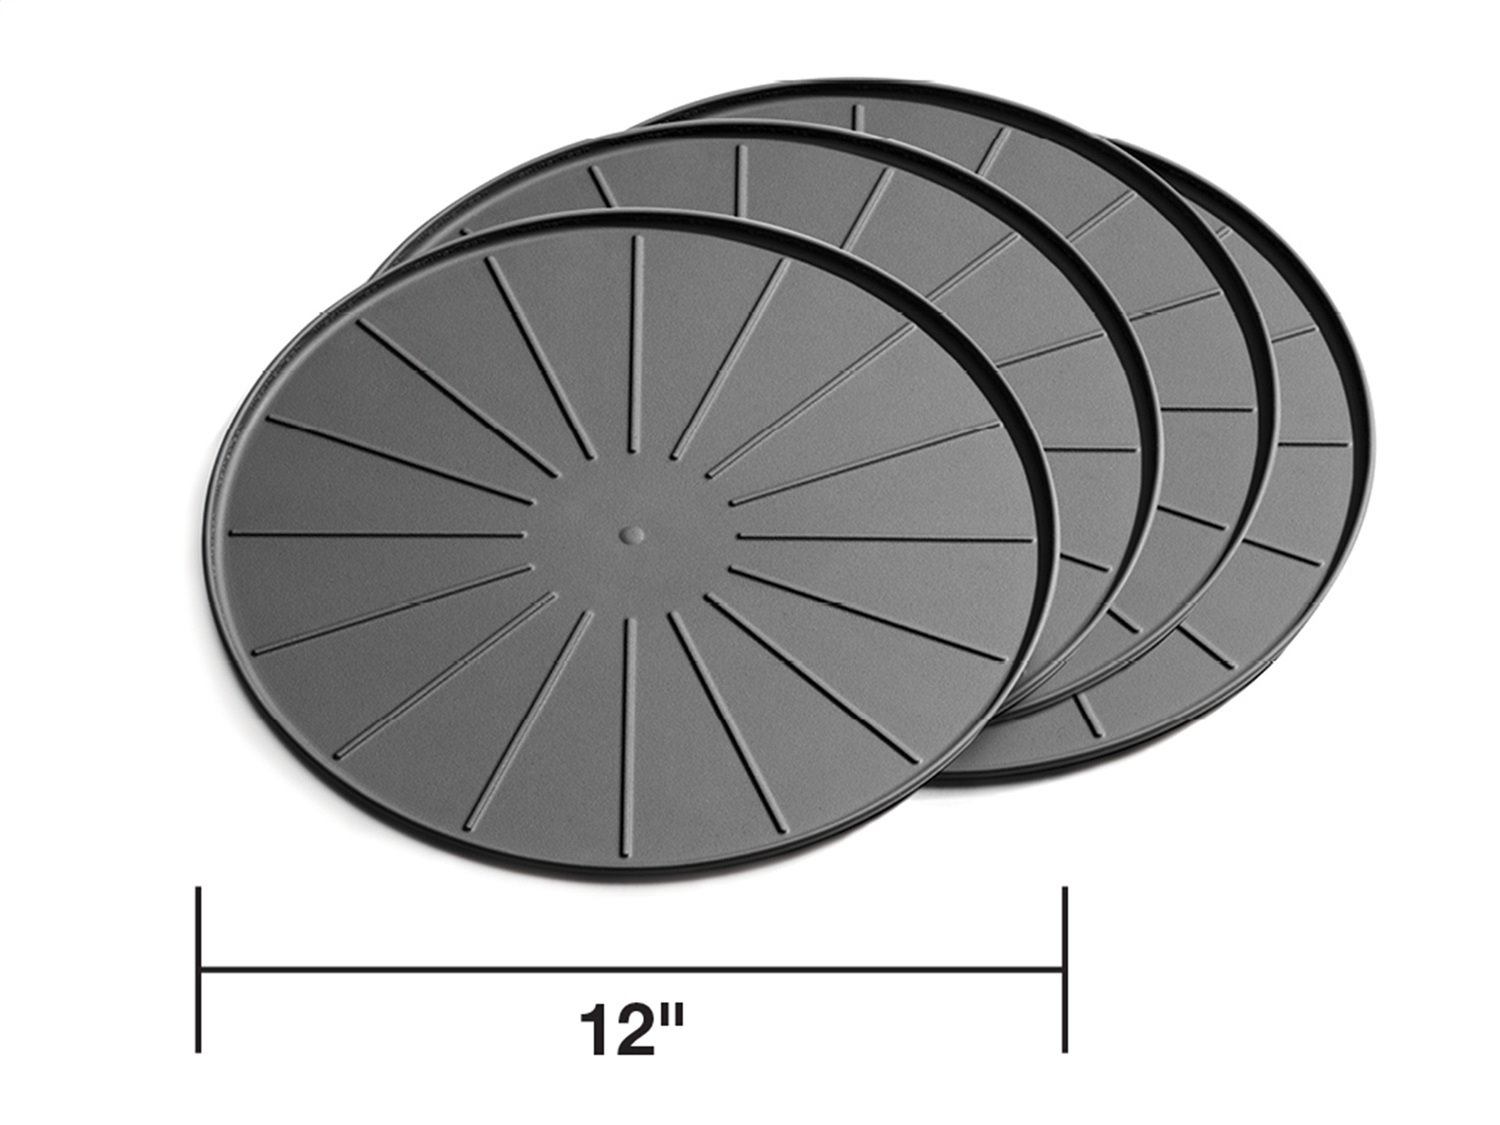 12" Round Coaster Set - Black